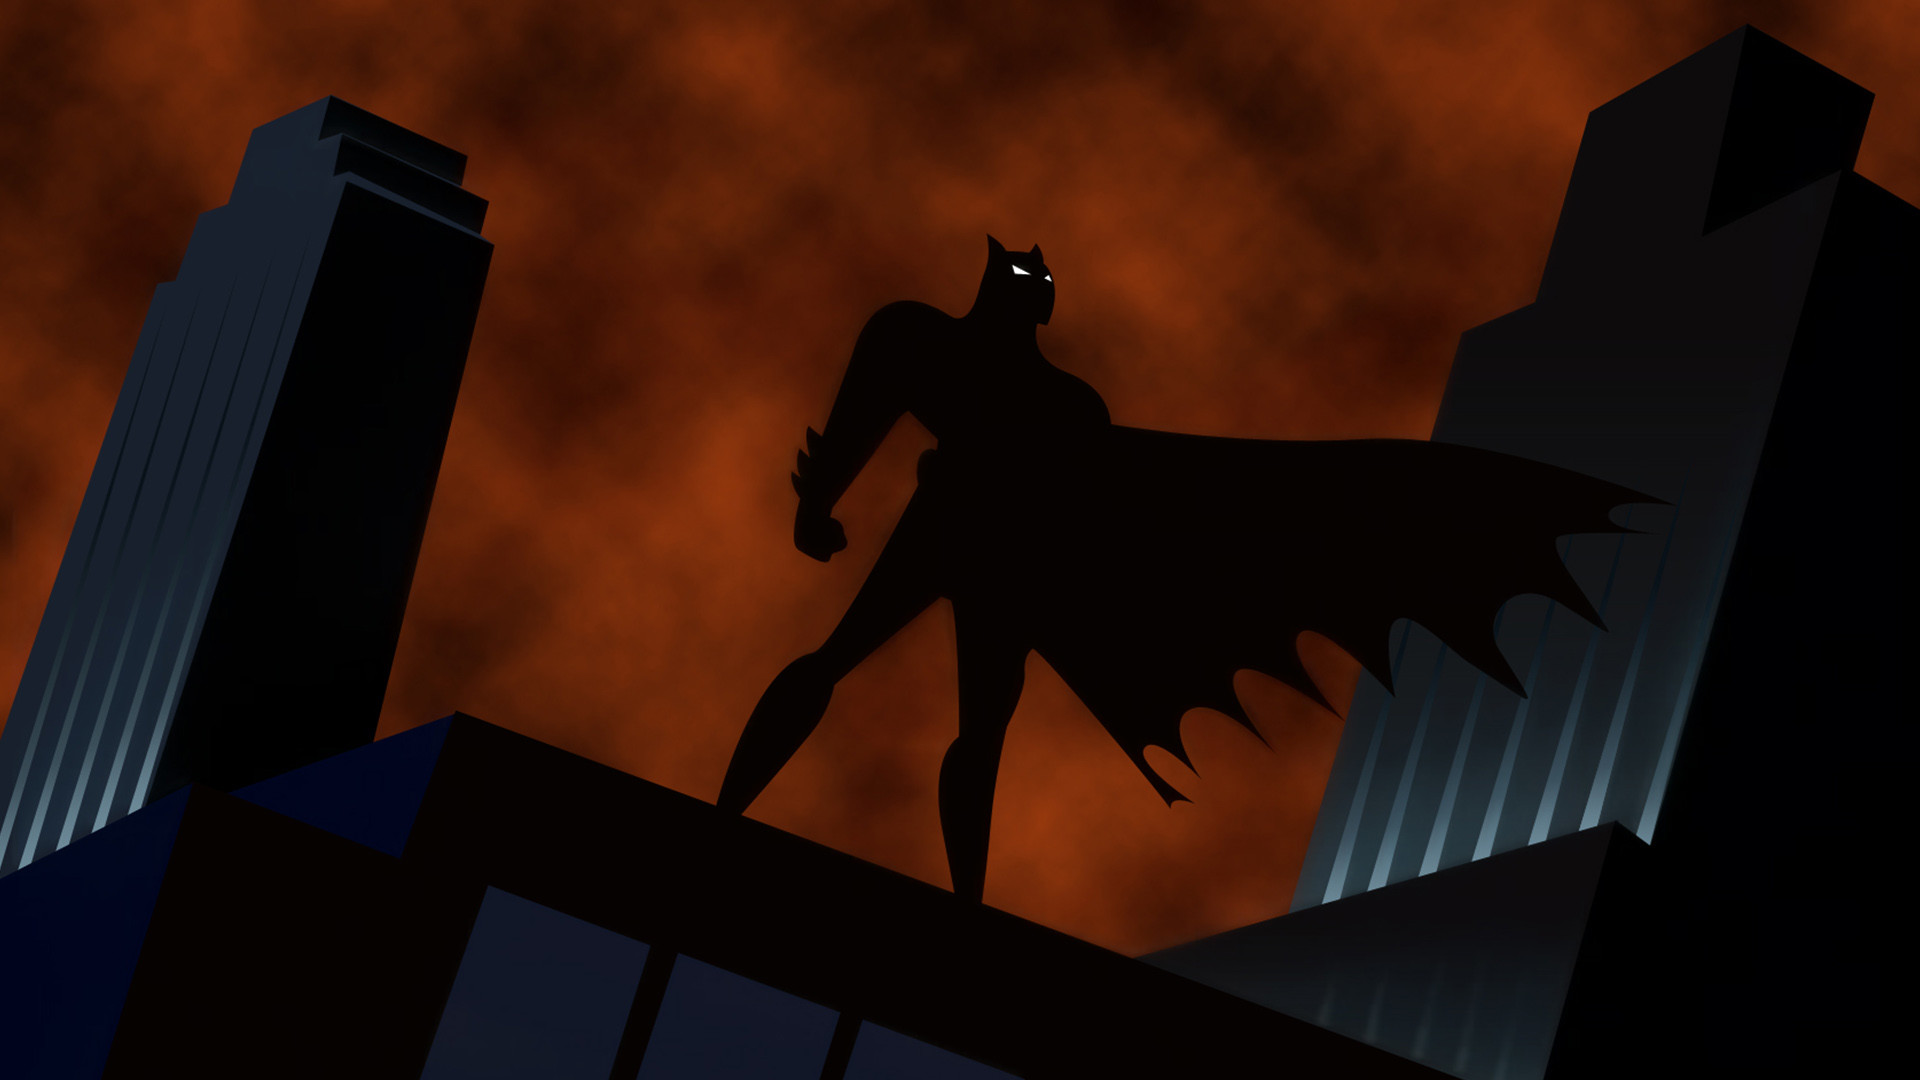 Batman The Animated Series TV fanart fanart.tv